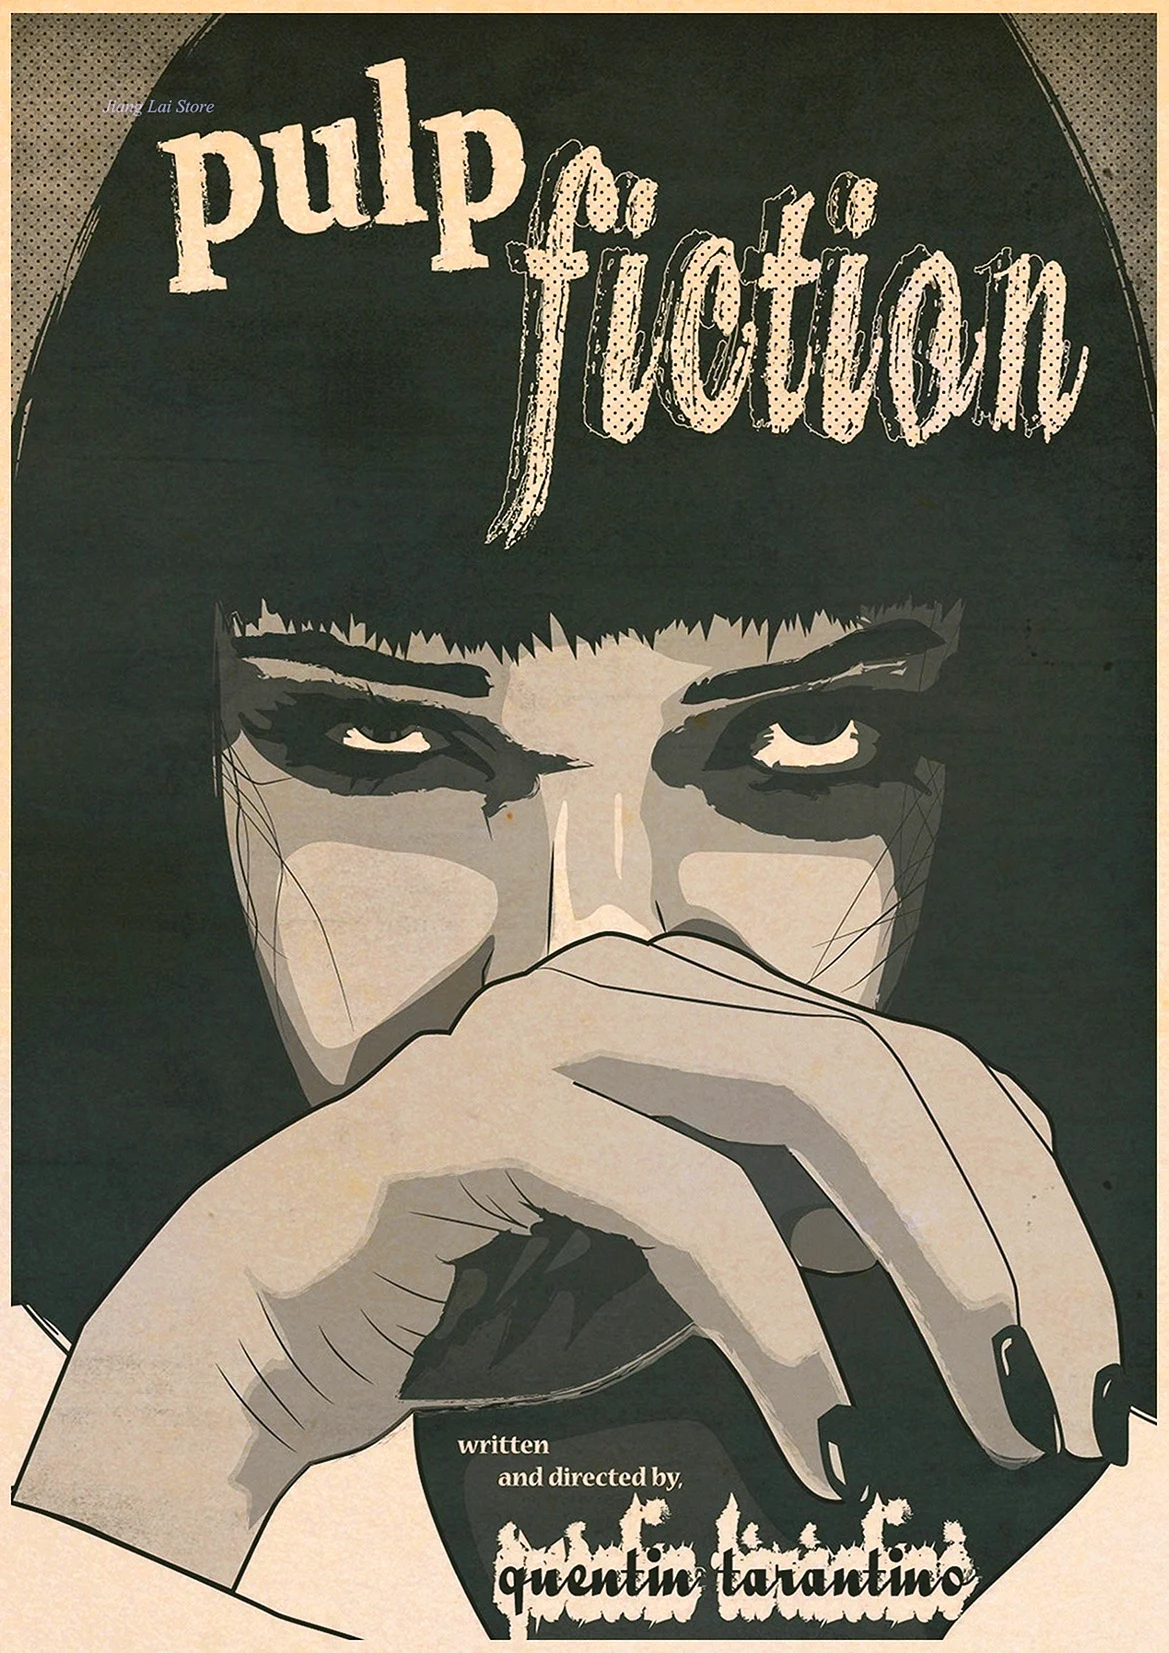 Retro Pulp Fiction Art Wallpaper For iPhone